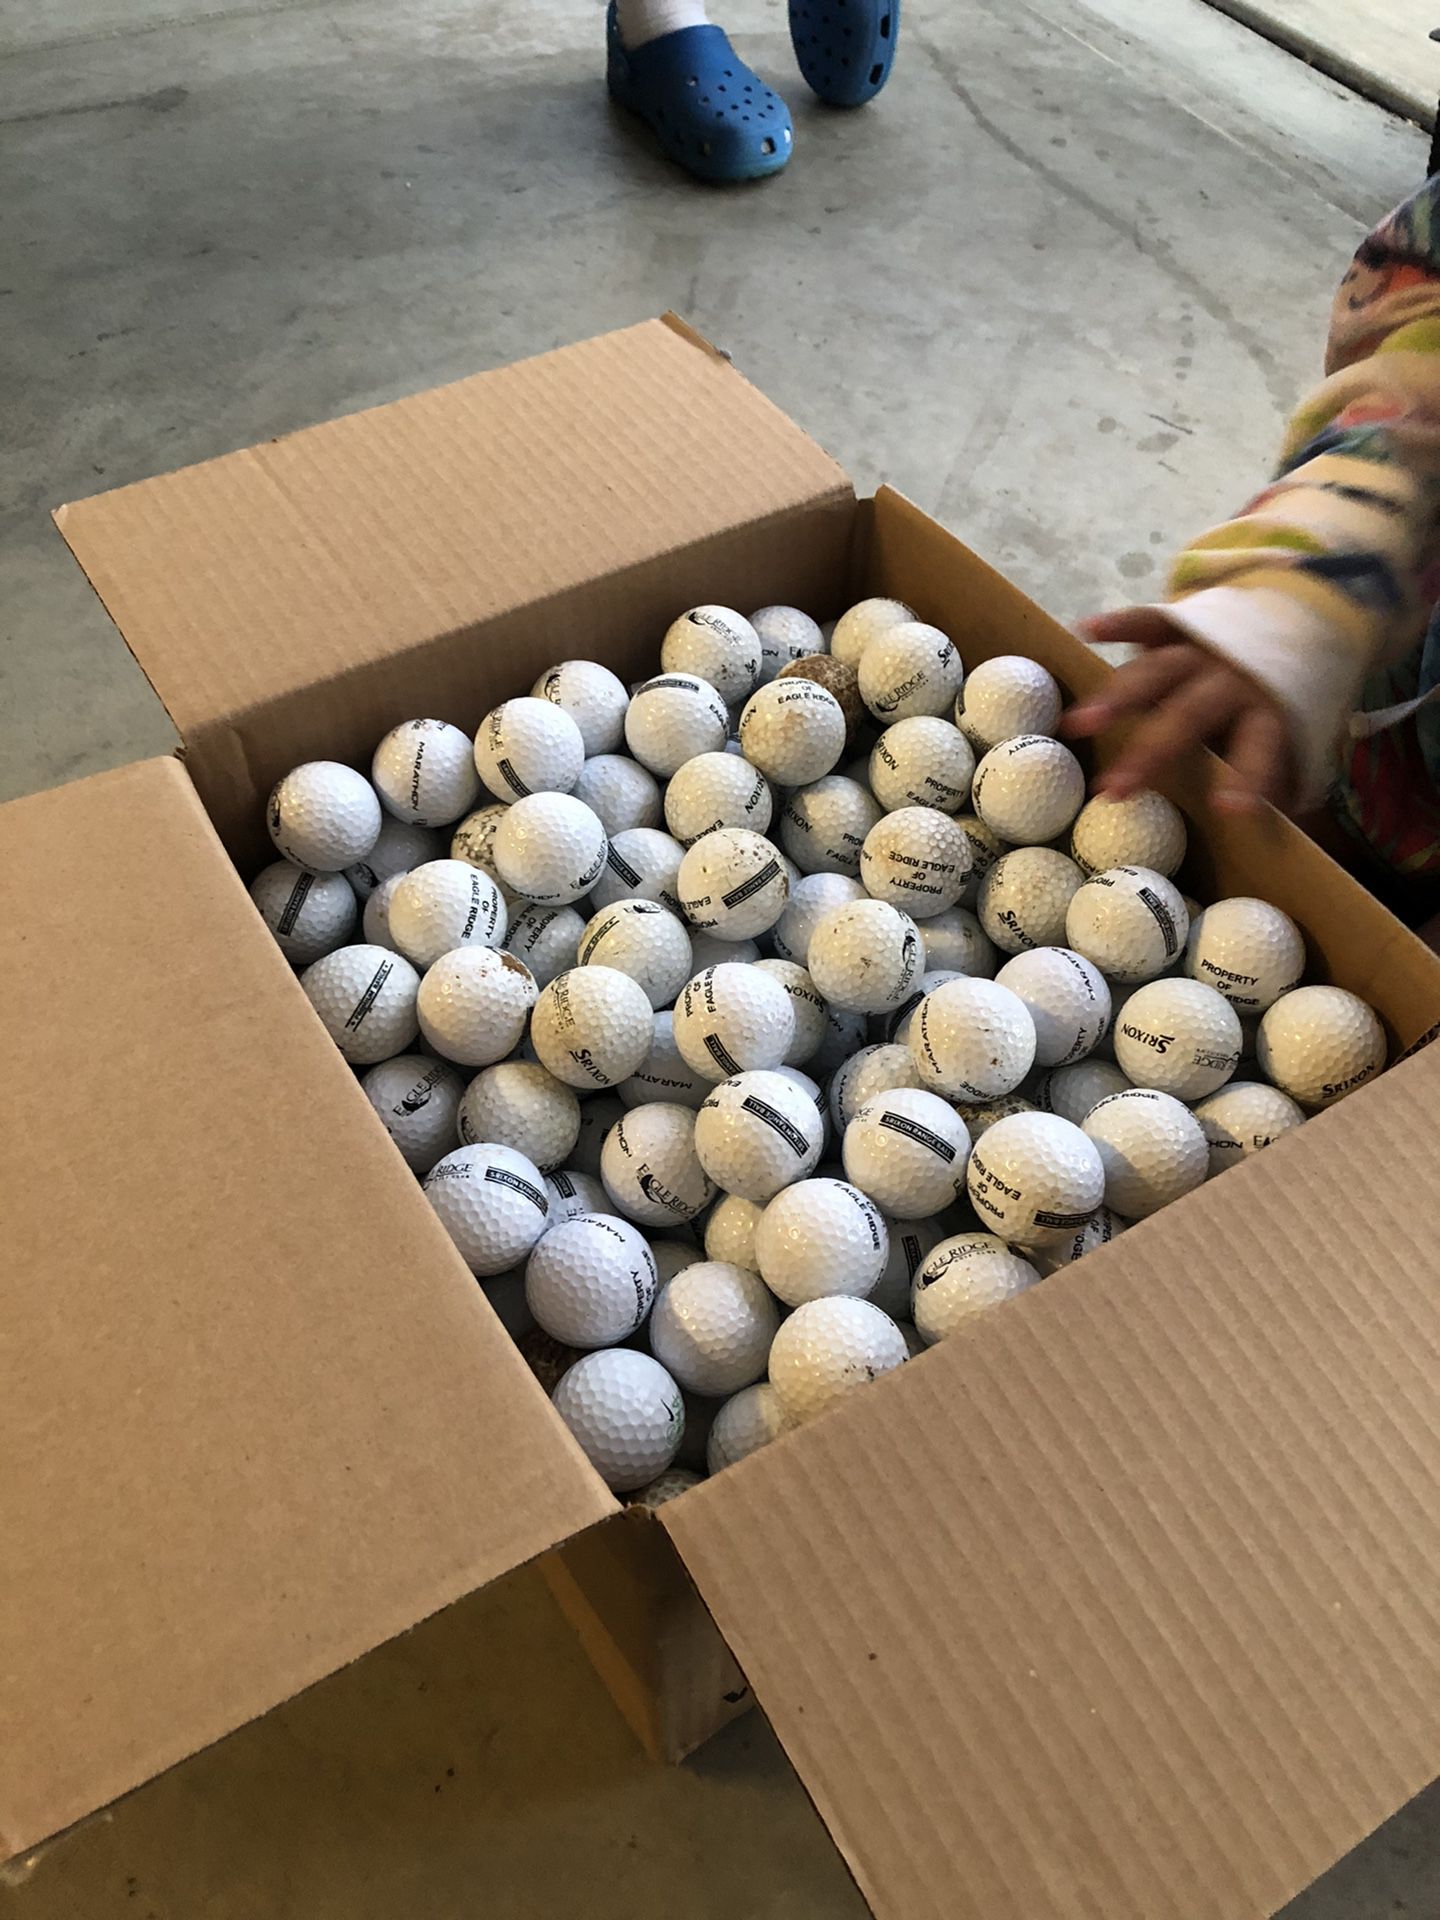 Golf balls (340 total)